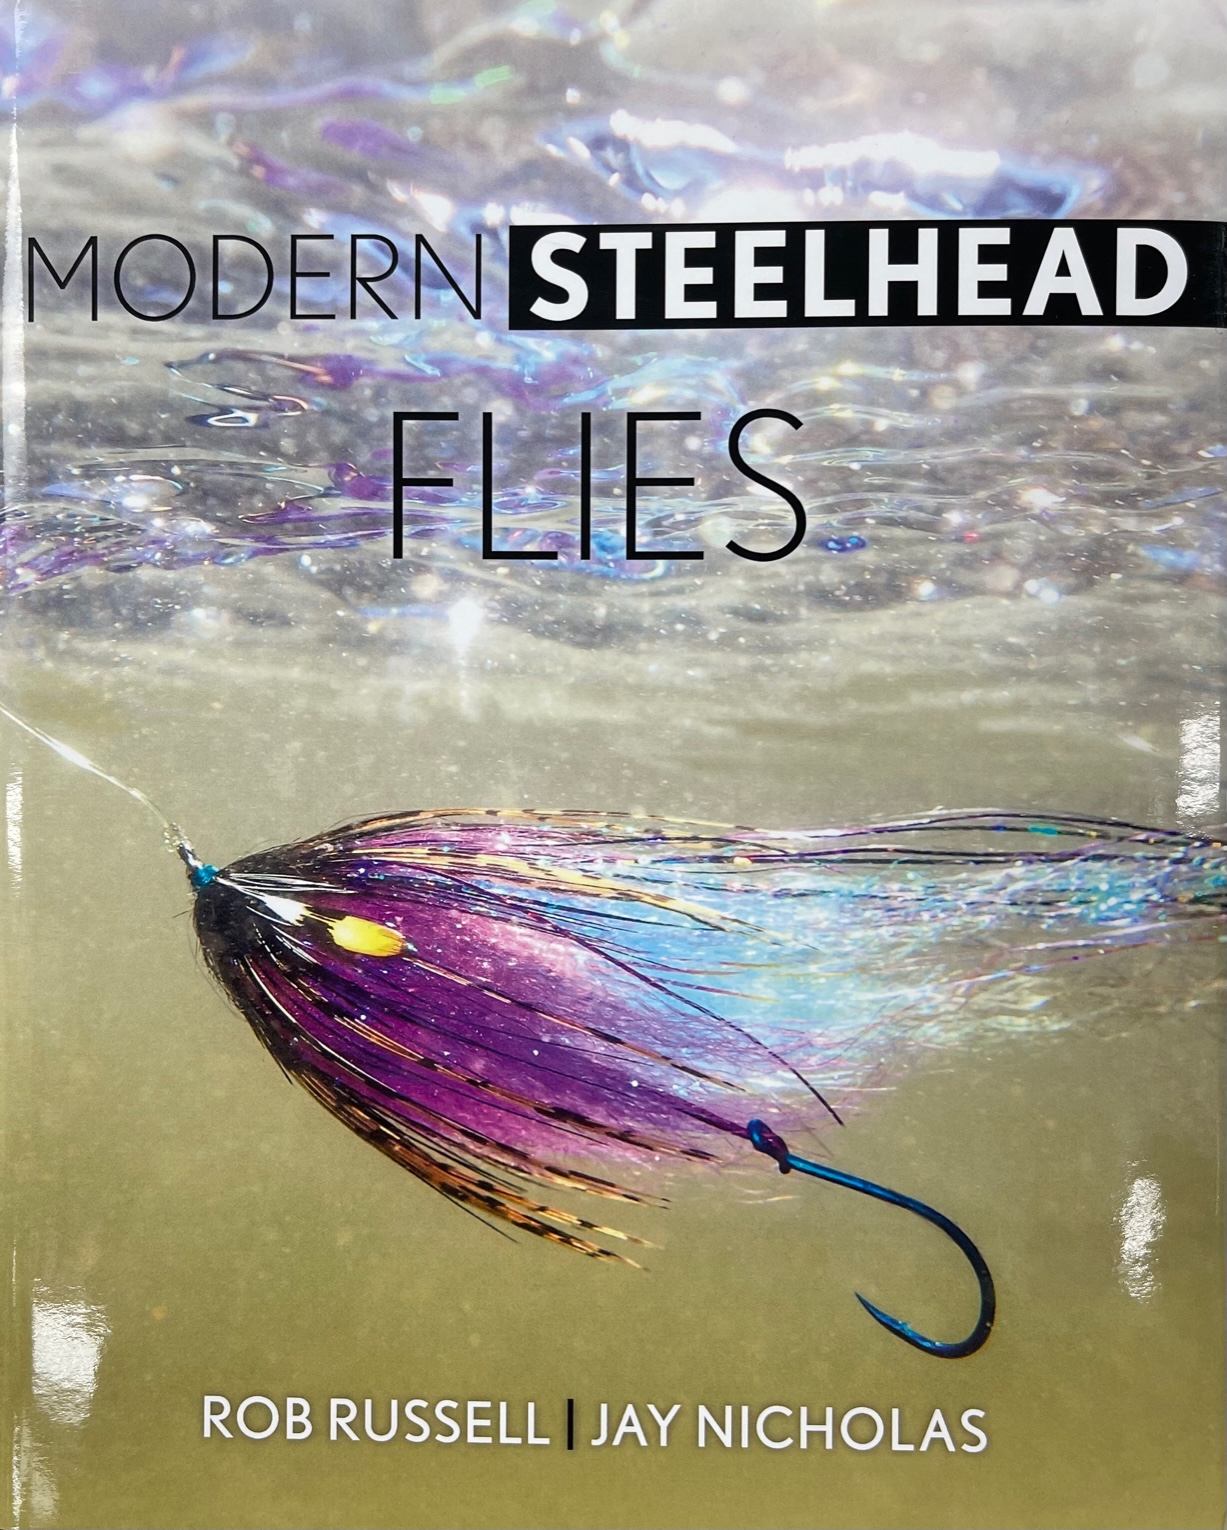 Modern Steelhead Flies - by Rob Russell & Jay Nicholas